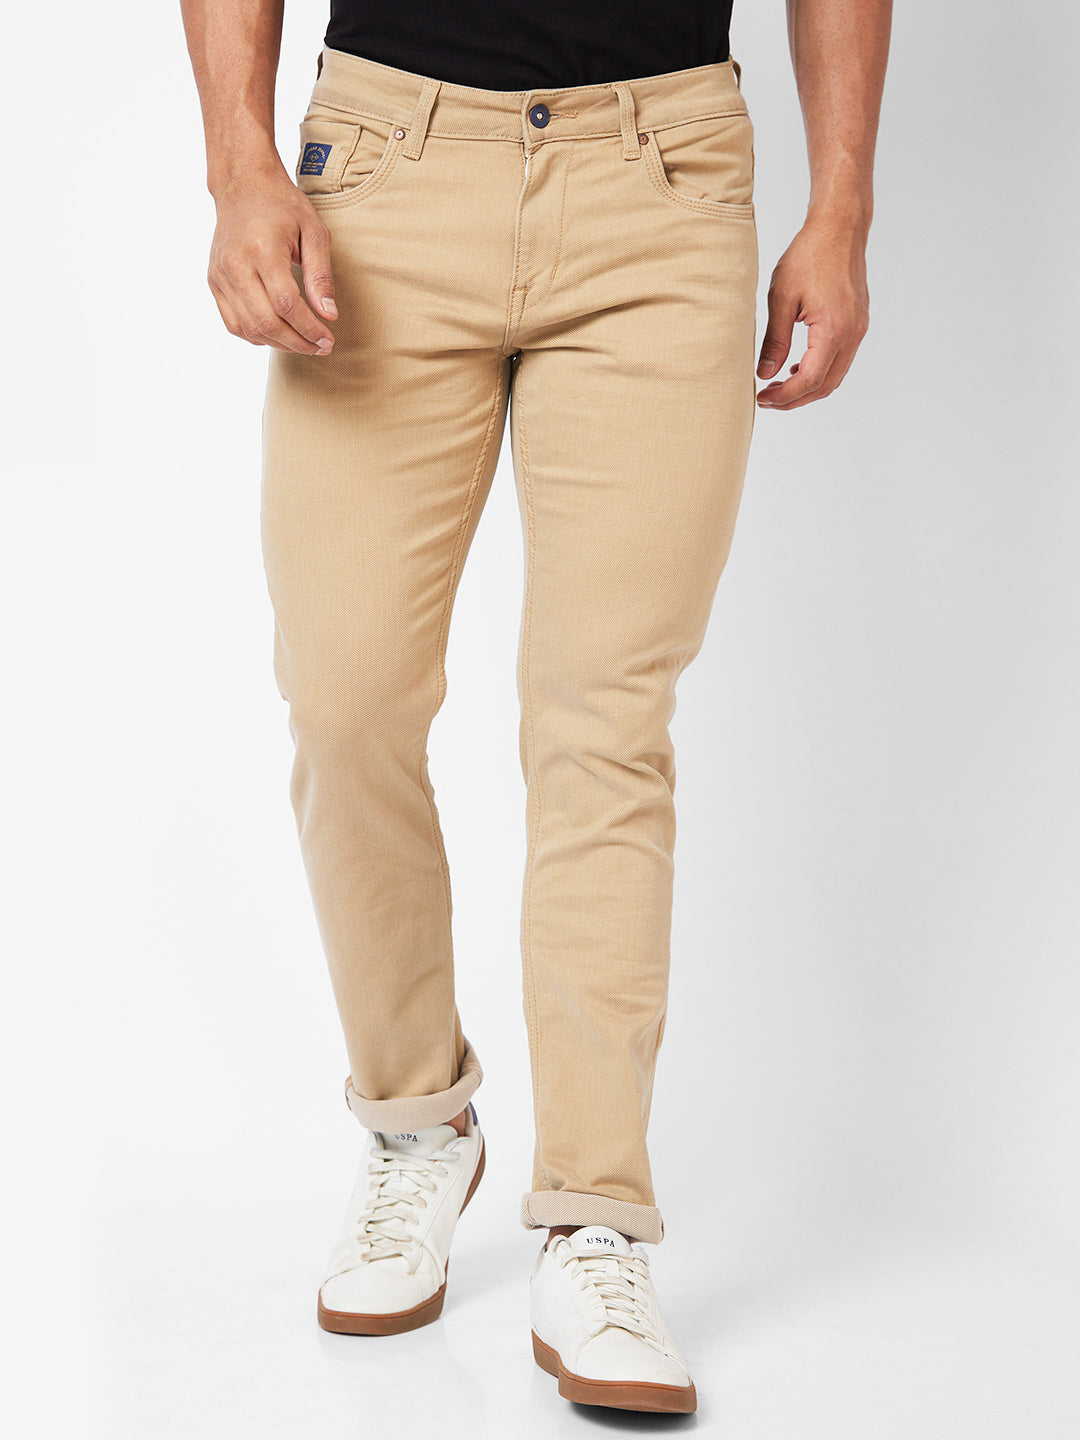 Spykar Low-Rise Slim Fit Khaki Jeans For Men